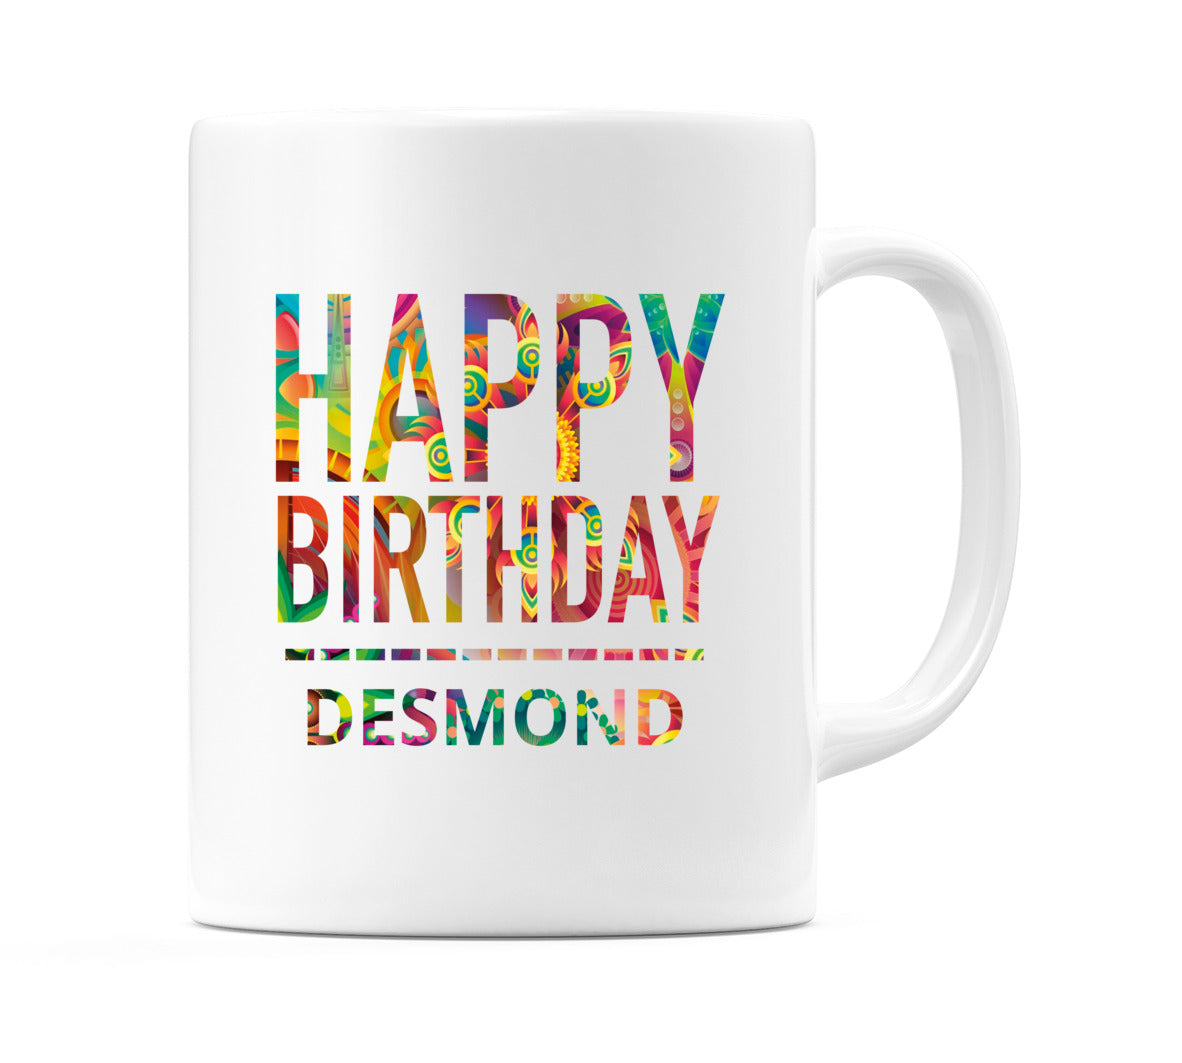 Happy Birthday Desmond (Tie Dye Effect) Mug Cup by WeDoMugs